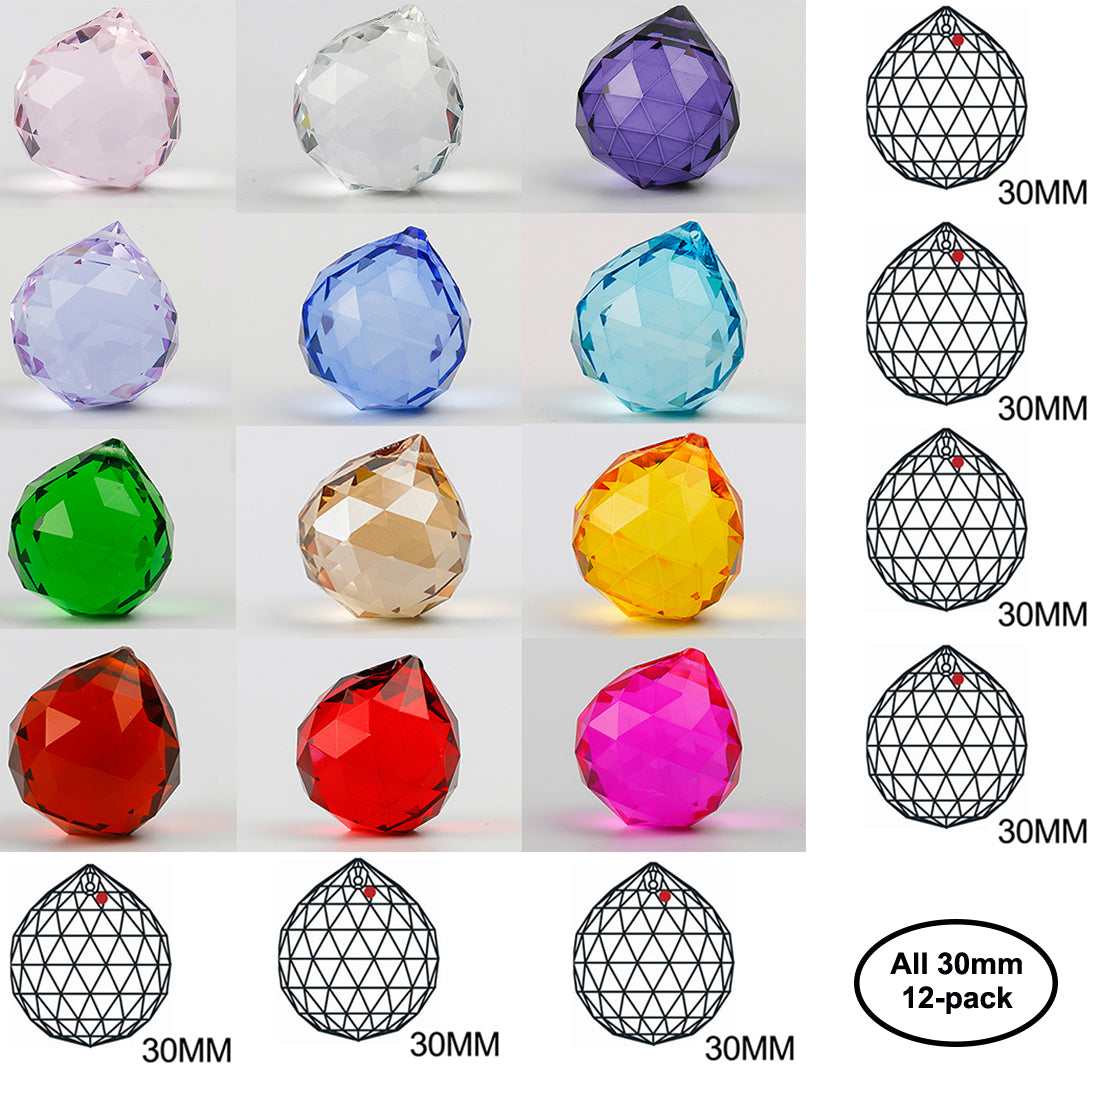  Crystalsuncatcher 30mm Vintage Feng Shui Faceted Decorating  Crystal Ball Prism Pendant Suncatcher Multi-Color Hanging Pendant Suncatcher  12pcs : Patio, Lawn & Garden